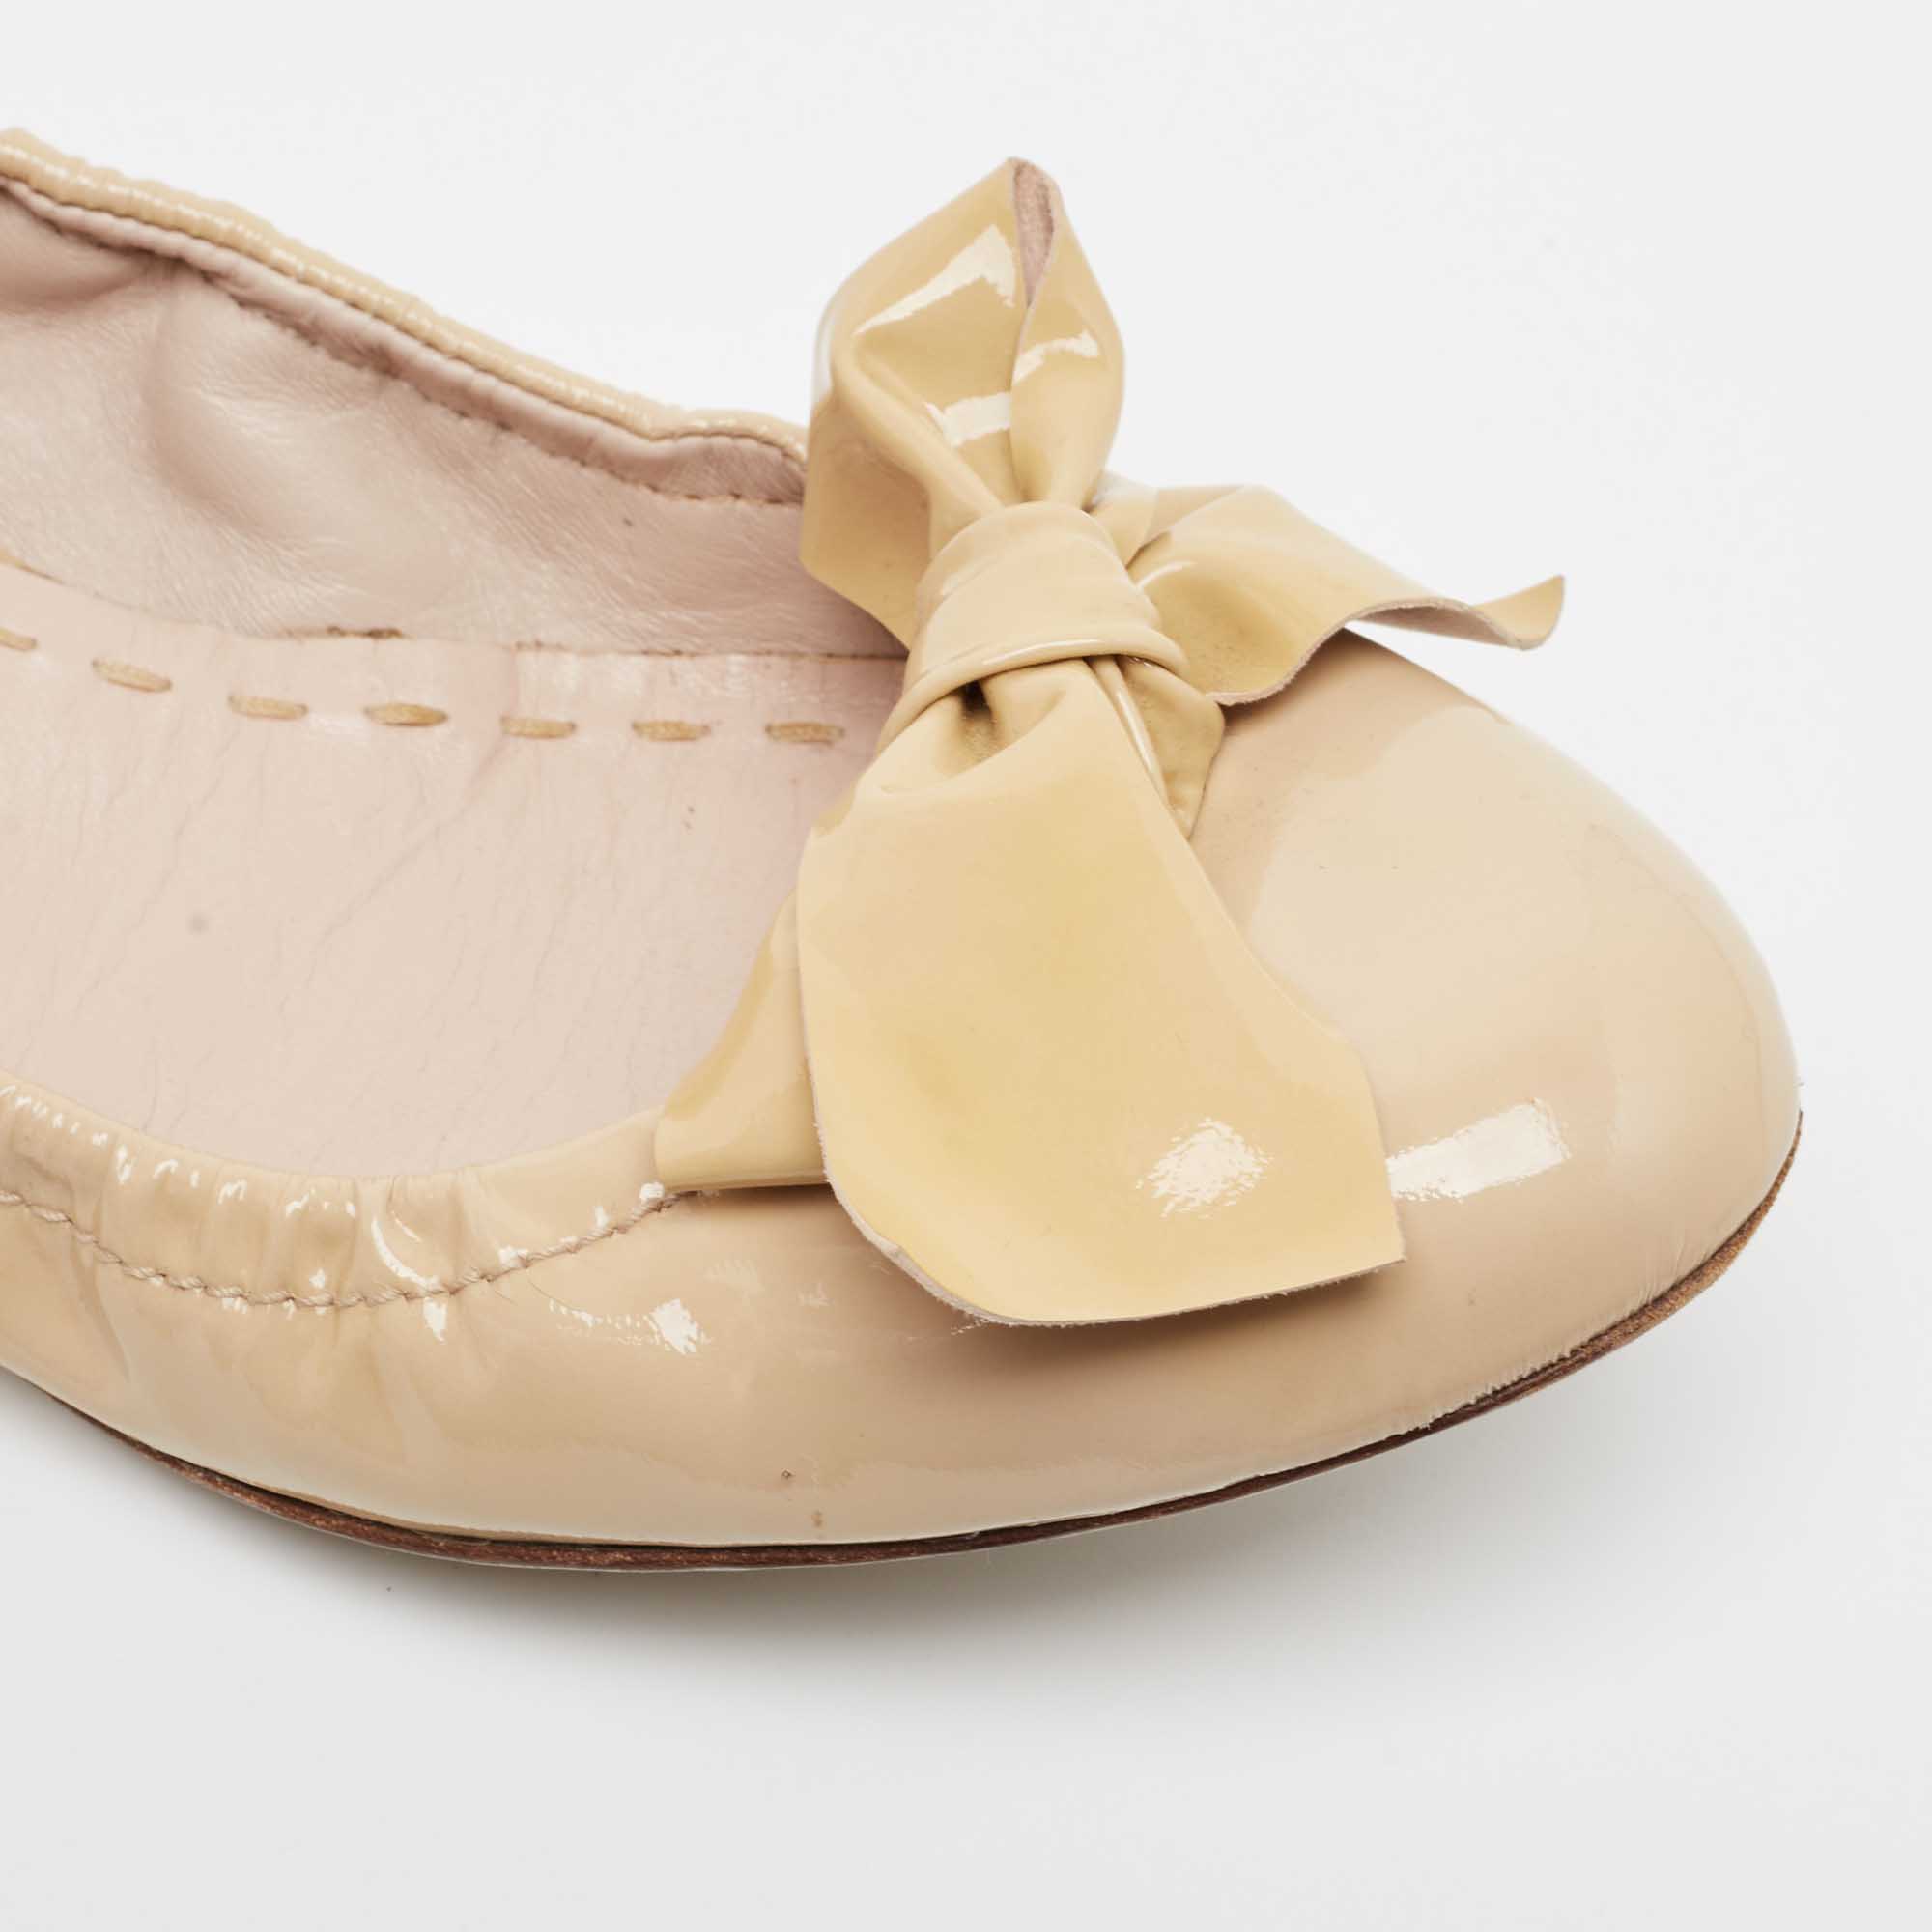 Miu Miu Beige/Gold Patent Leather Bow Detail Crystal Embellished Heel Scrunch Ballet Flats Size 36.5